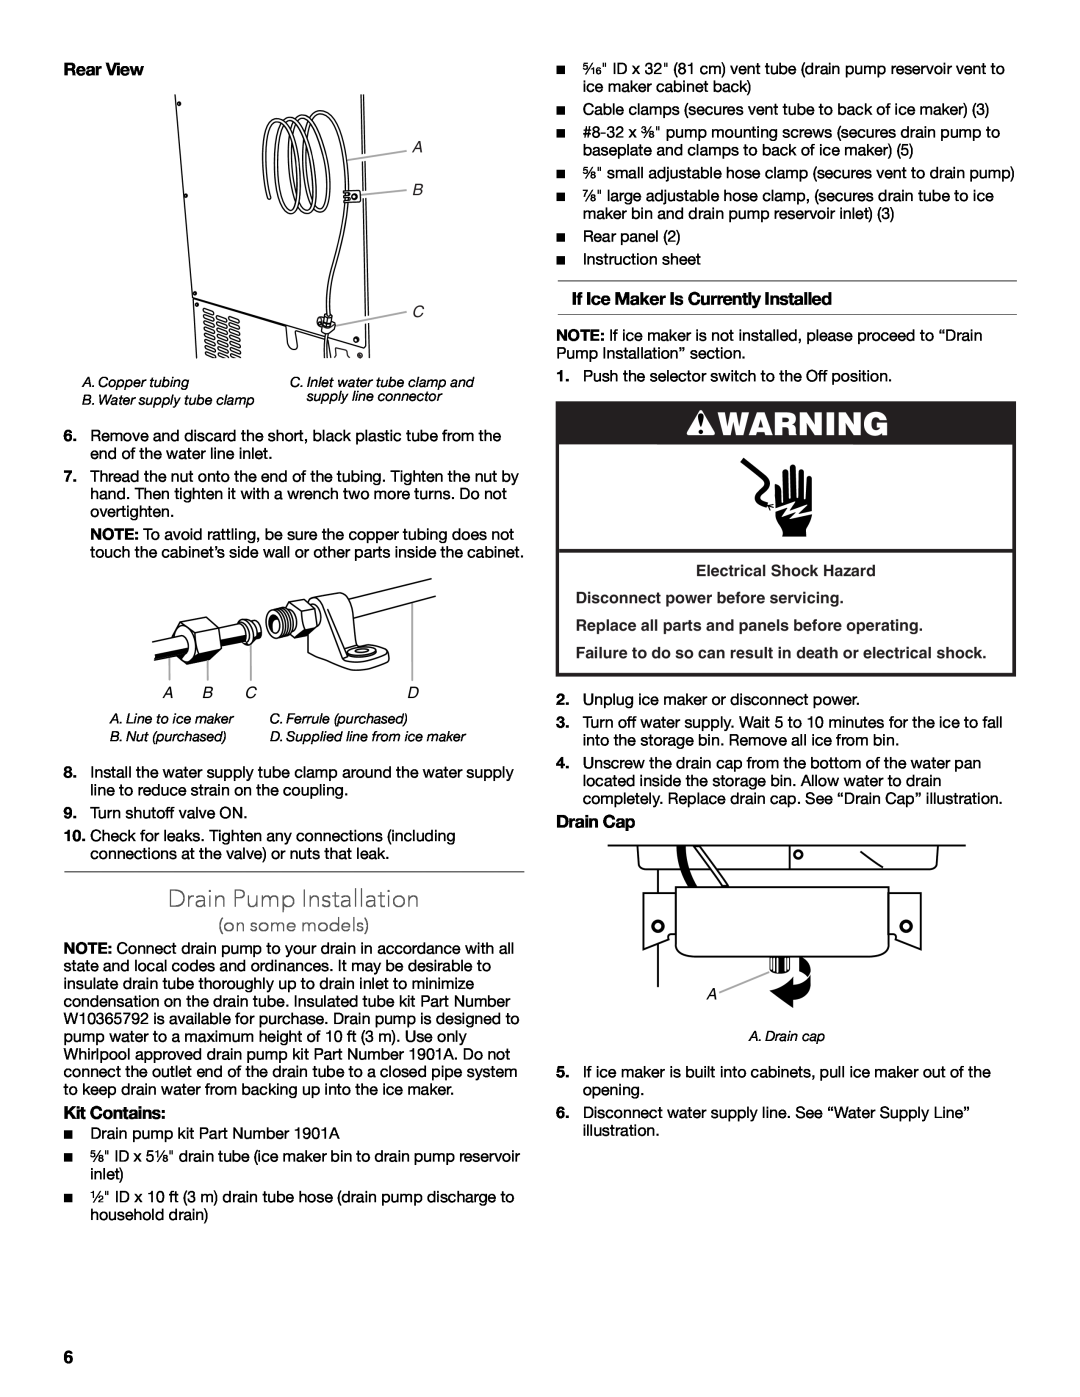 KitchenAid W10515677C manual Drain Pump Installation, on some models, Rear View, Kit Contains, Drain Cap, A B C 